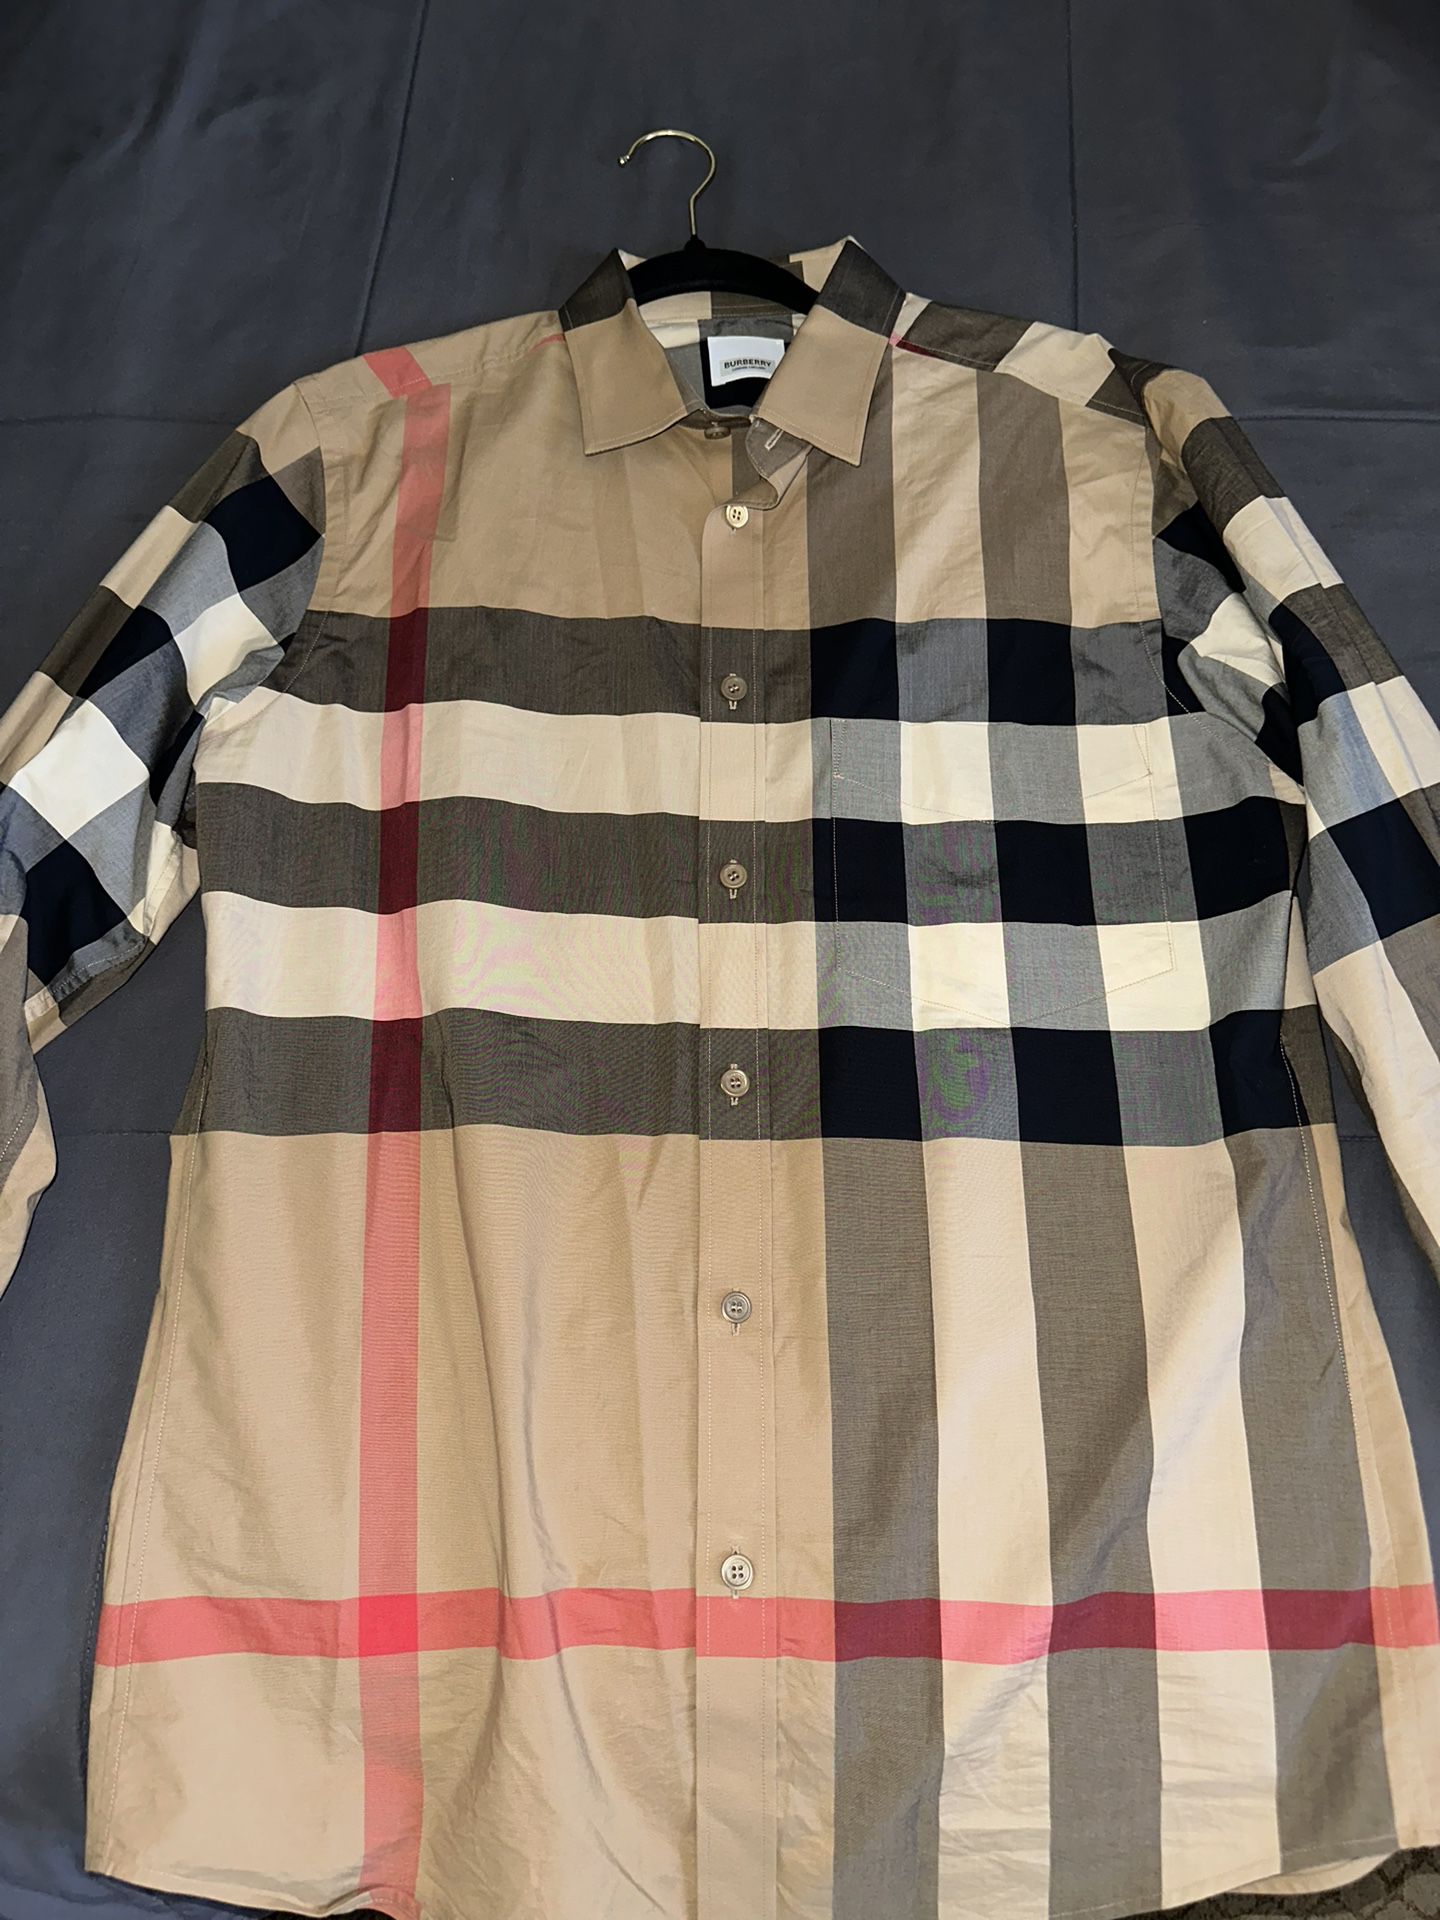 Burberry (Beige Vintage Check Shirt) M $500 OBO